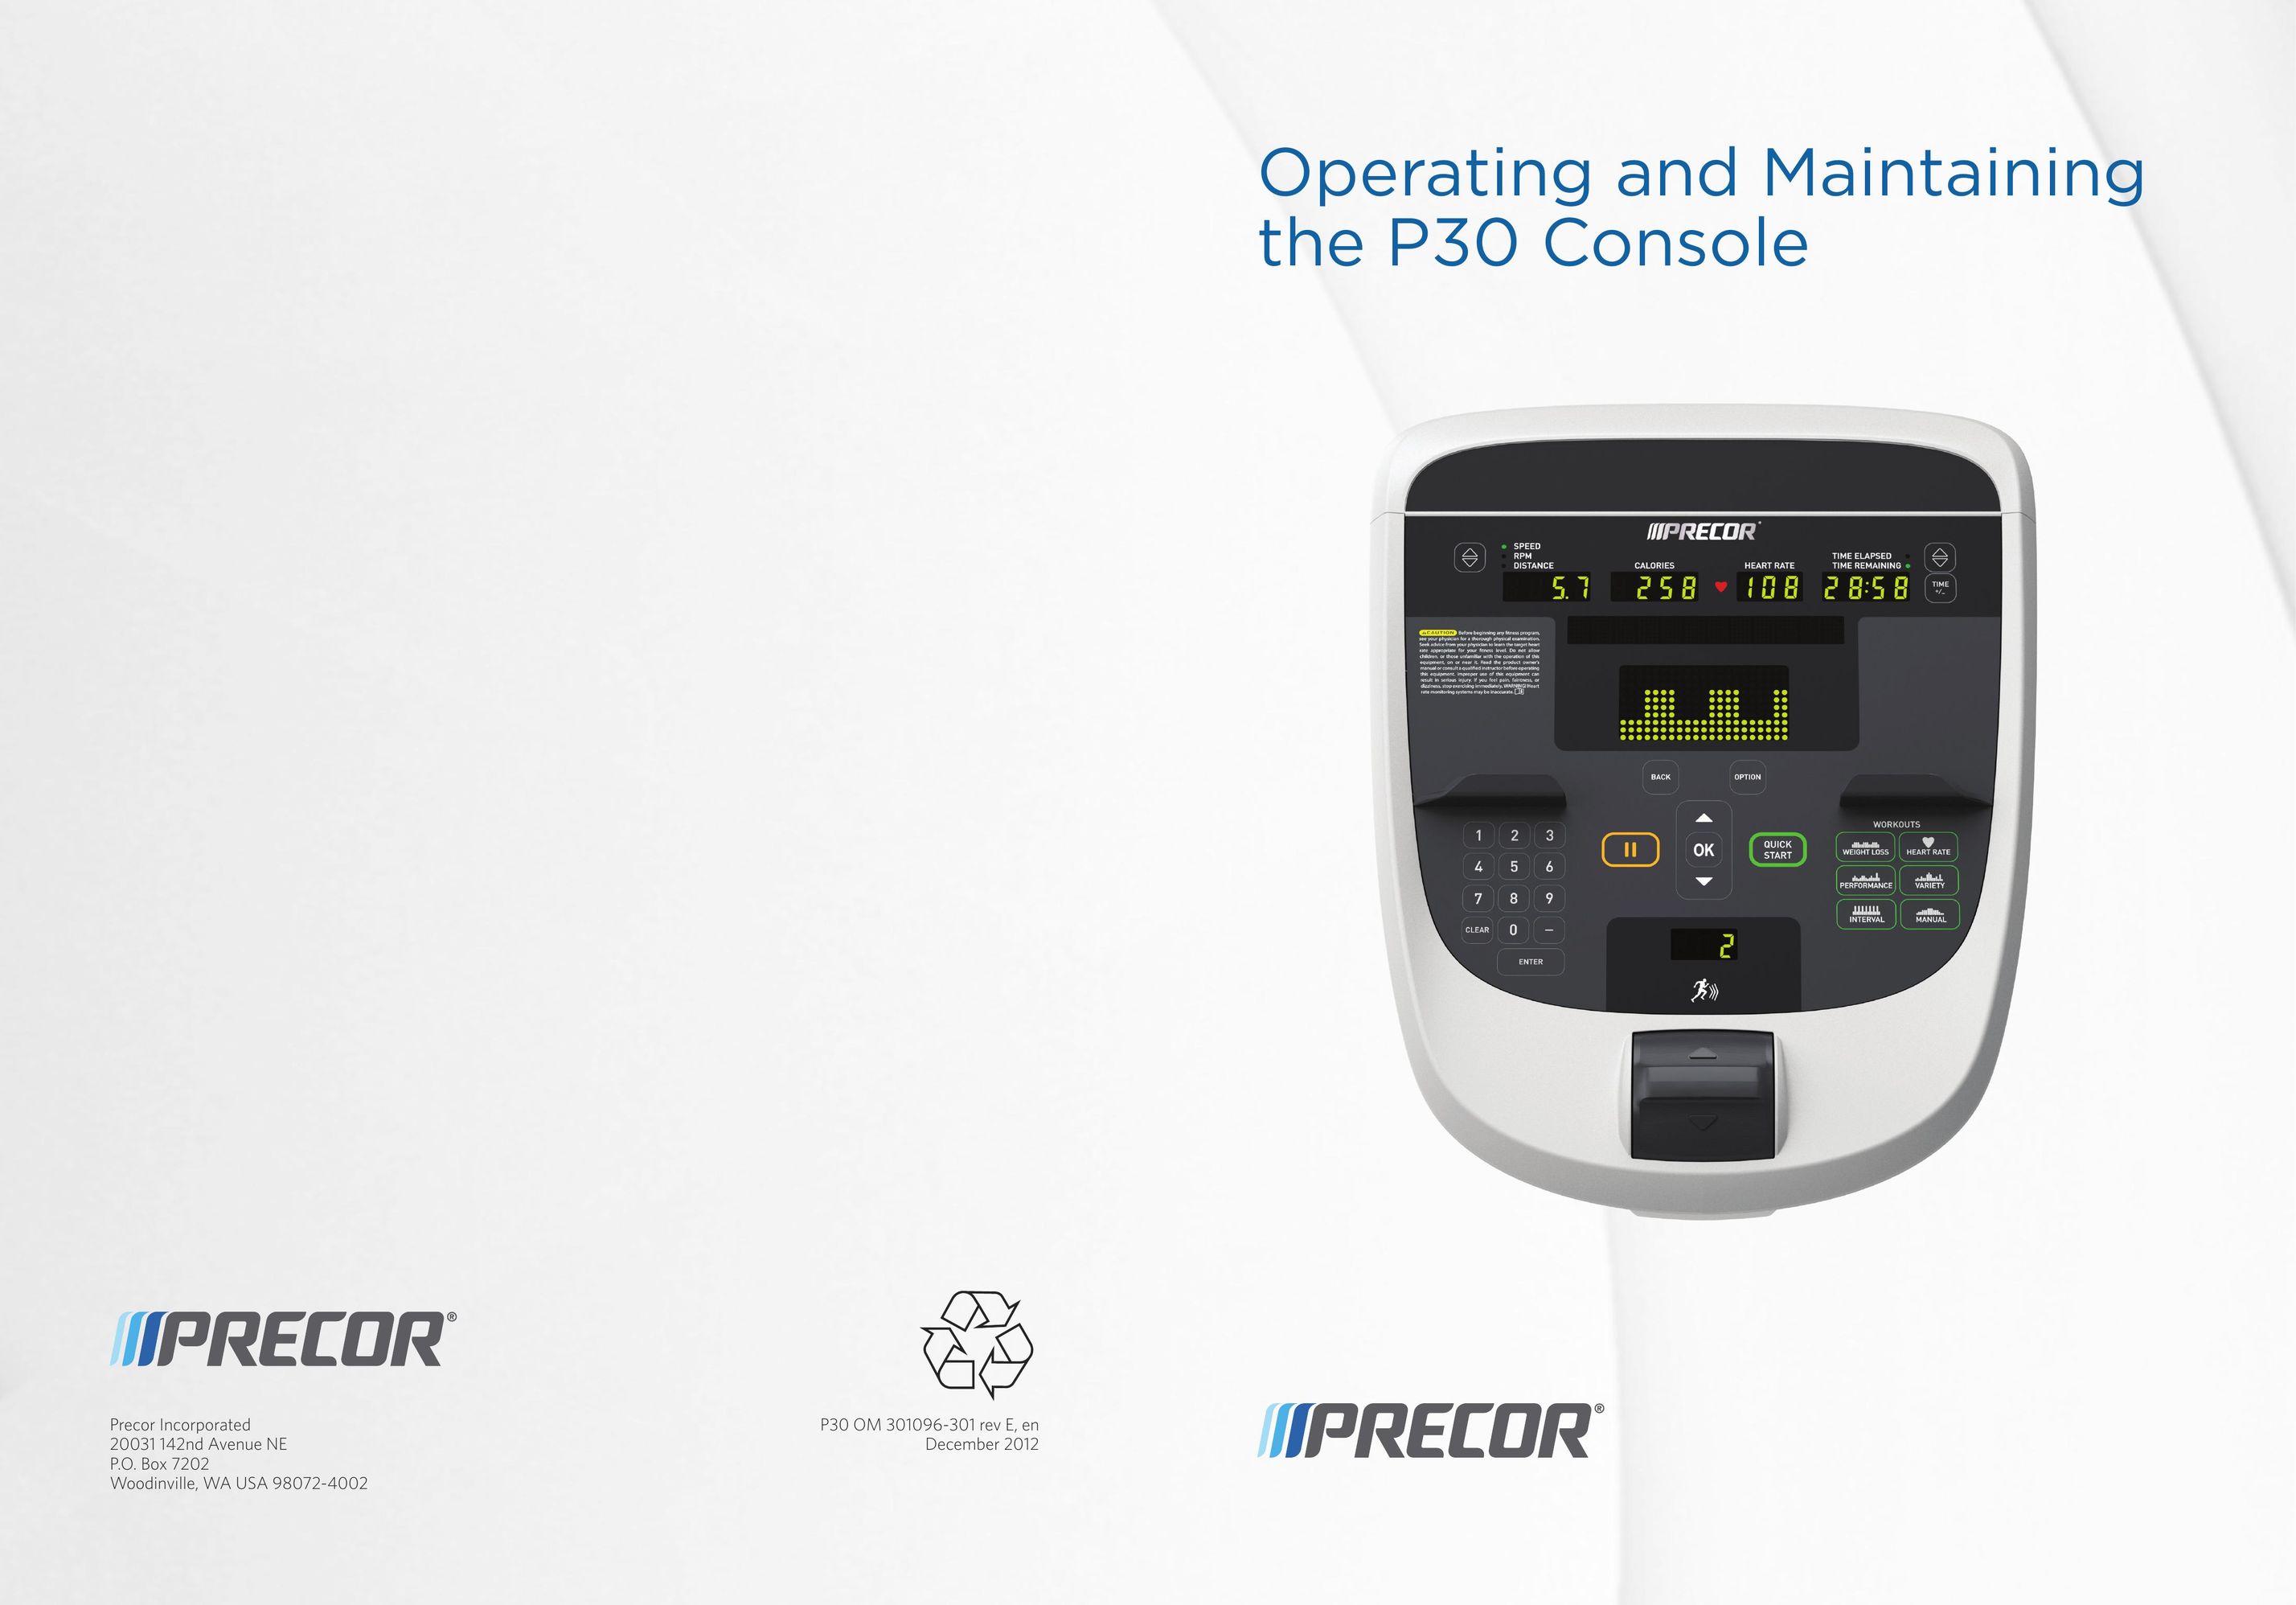 Precor P30 Cyclometer User Manual